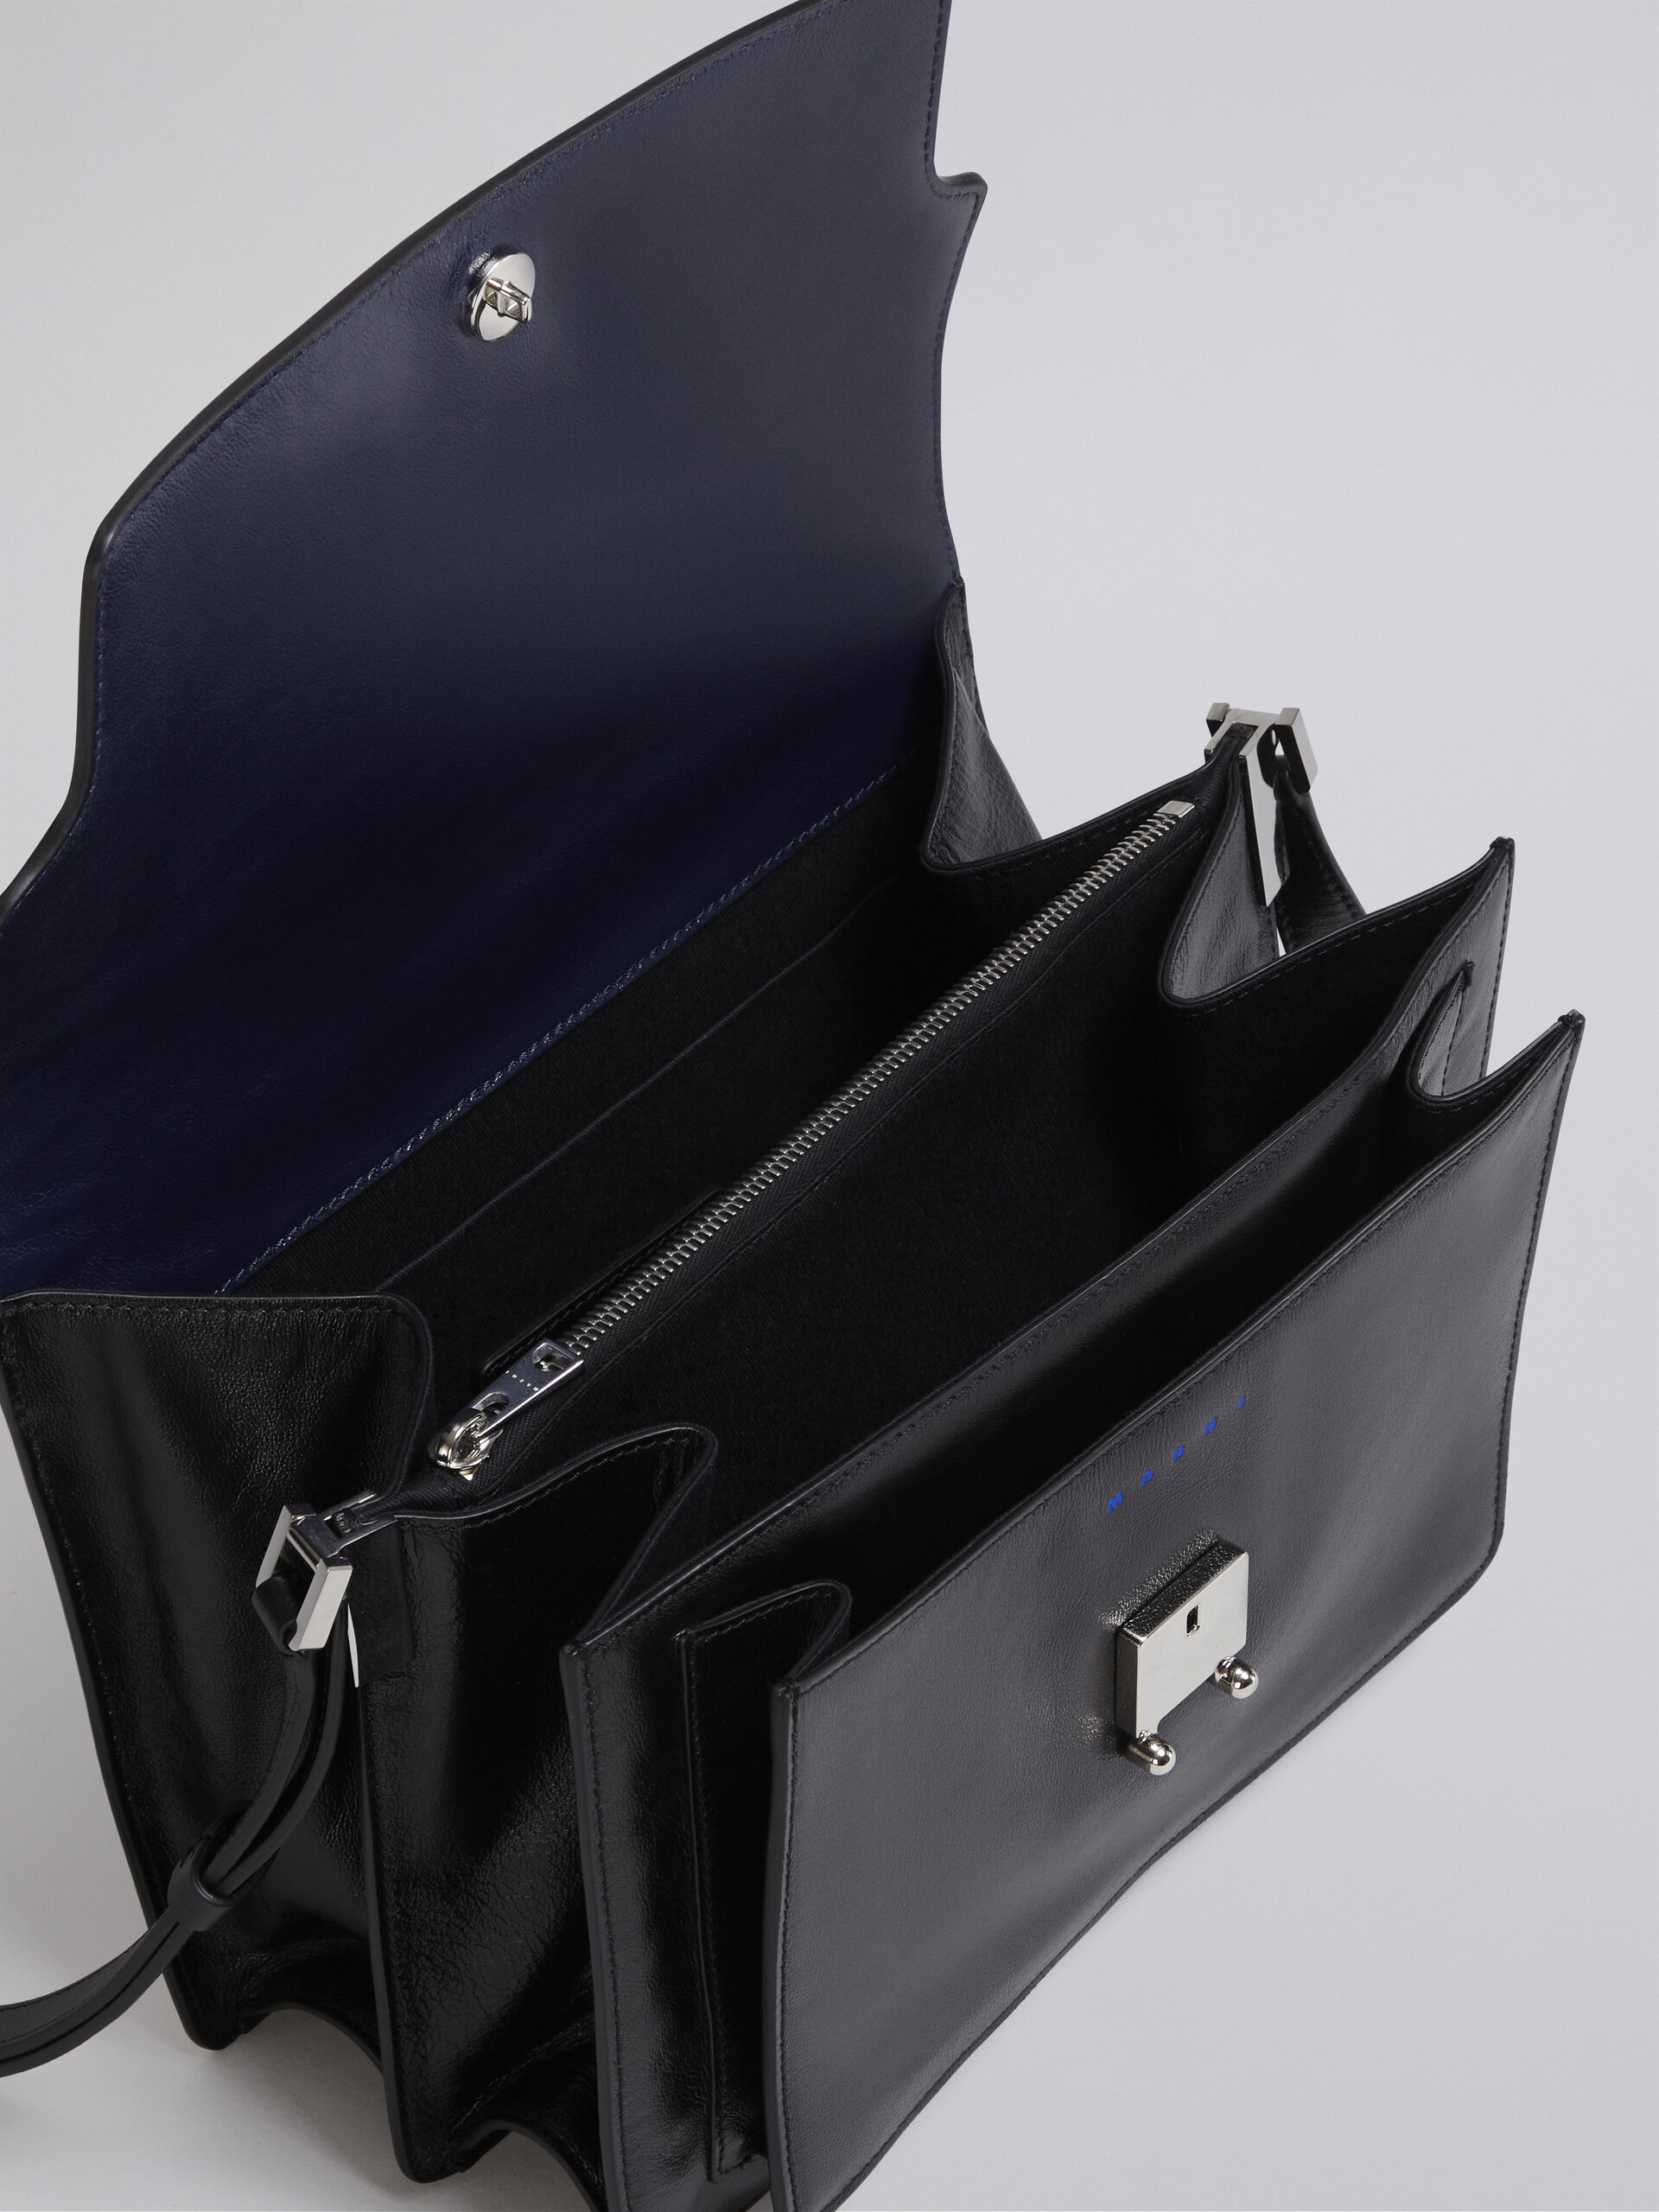 Marni Trunk Soft Small Leather Shoulder Bag in Black